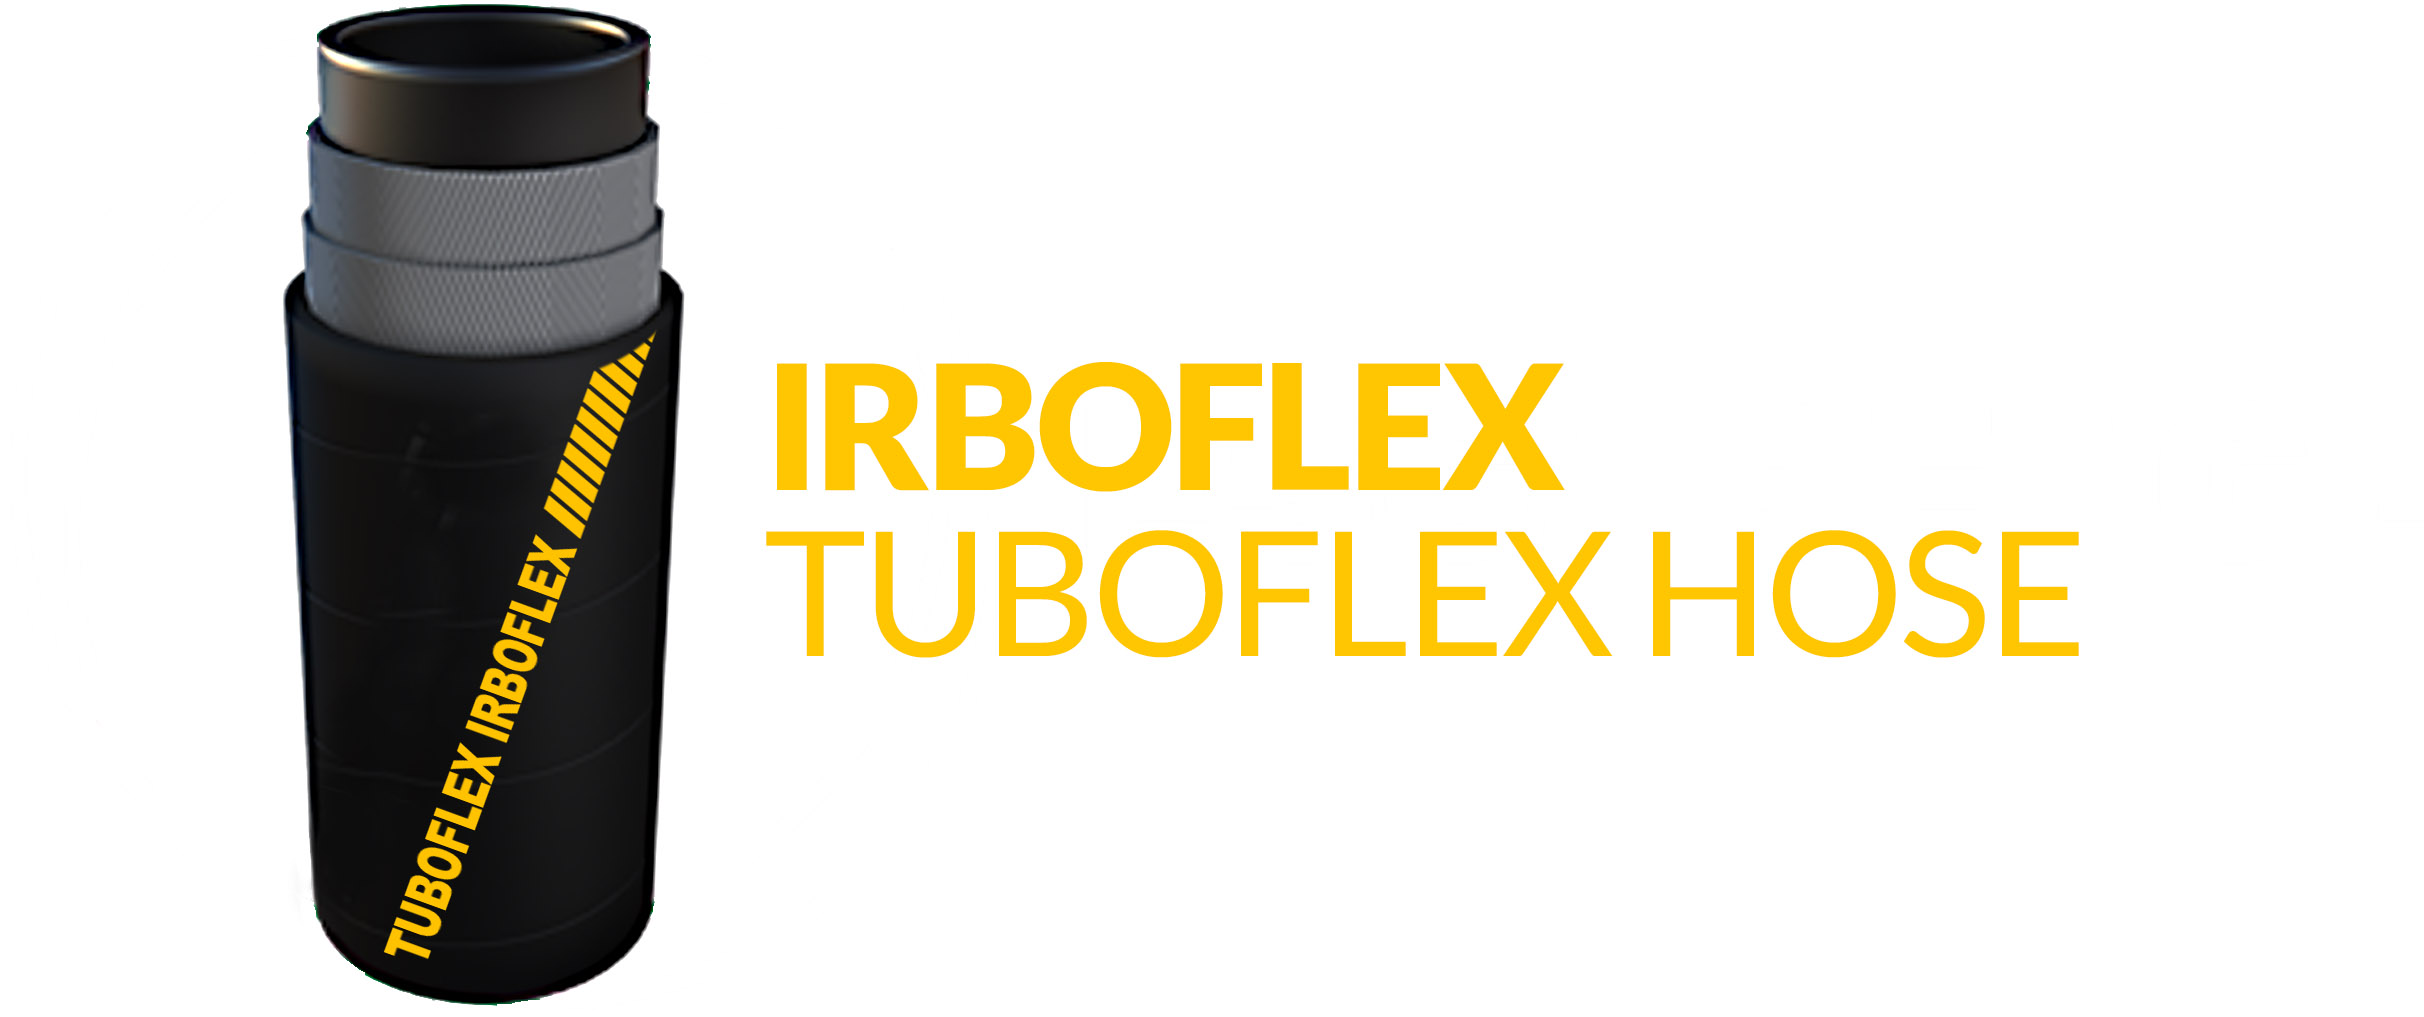 tuboflex-15-psi-irboflex-tuboflex-hose-